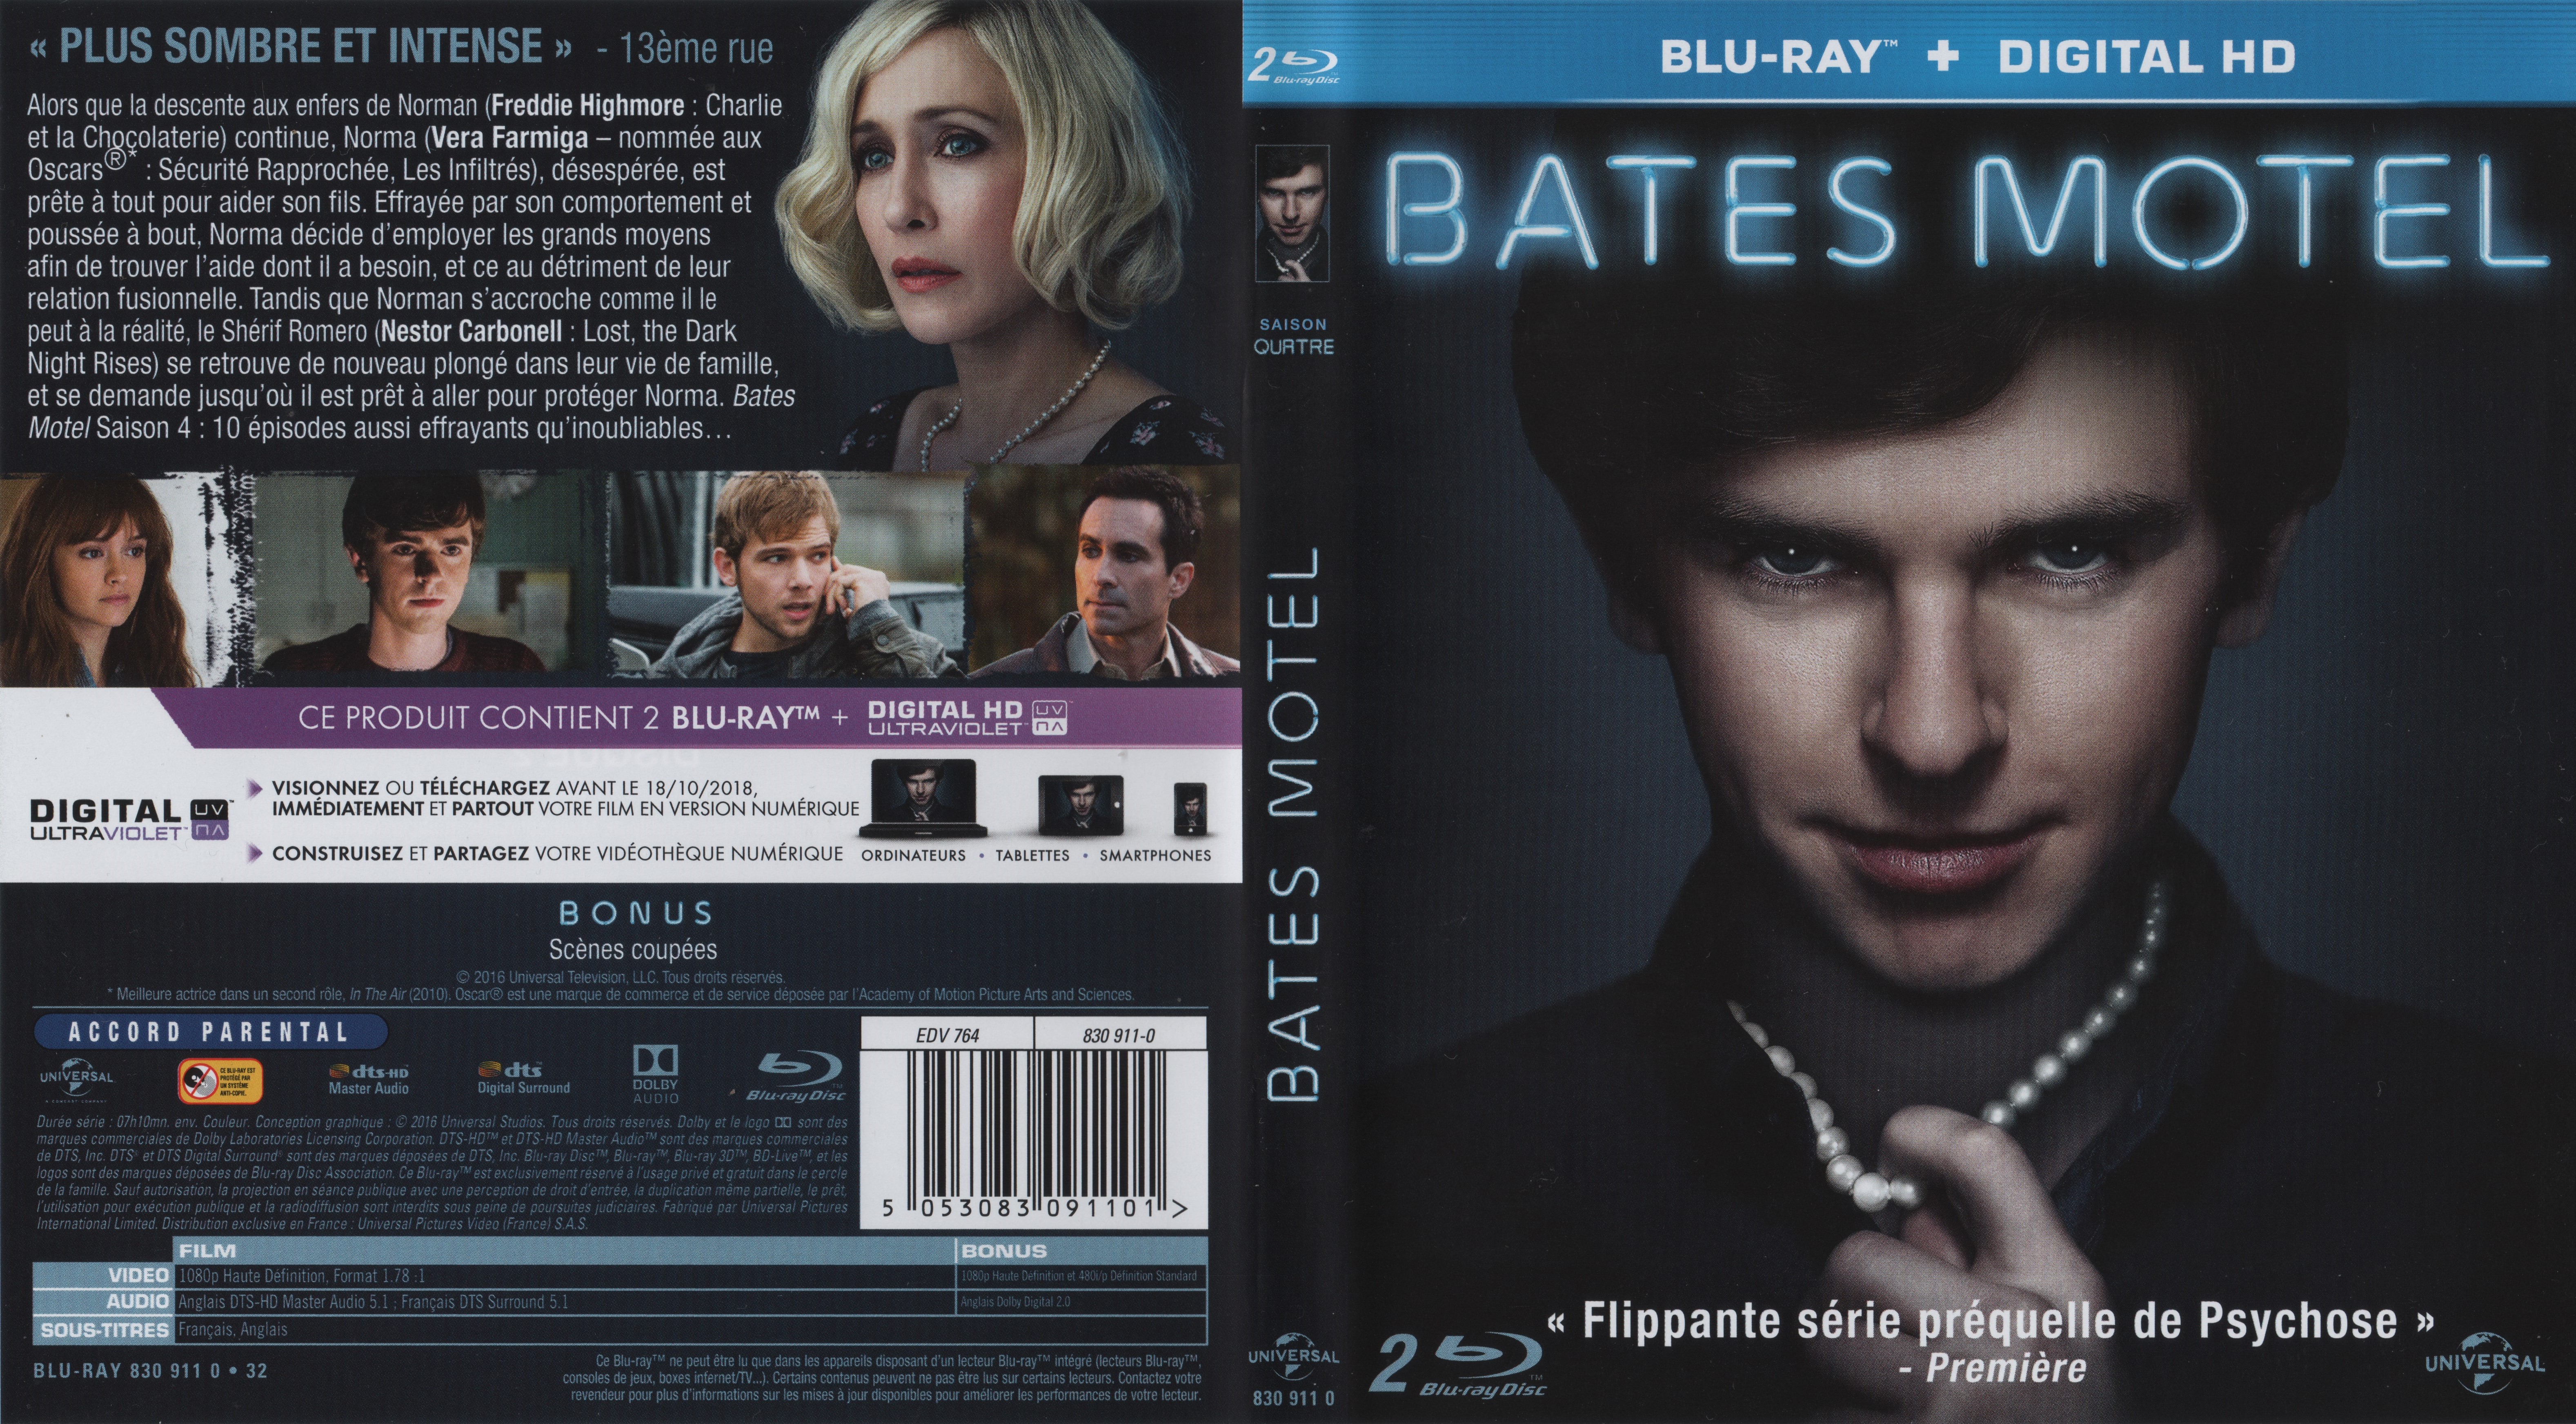 Jaquette DVD Bates motel Saison 4 (BLU-RAY)